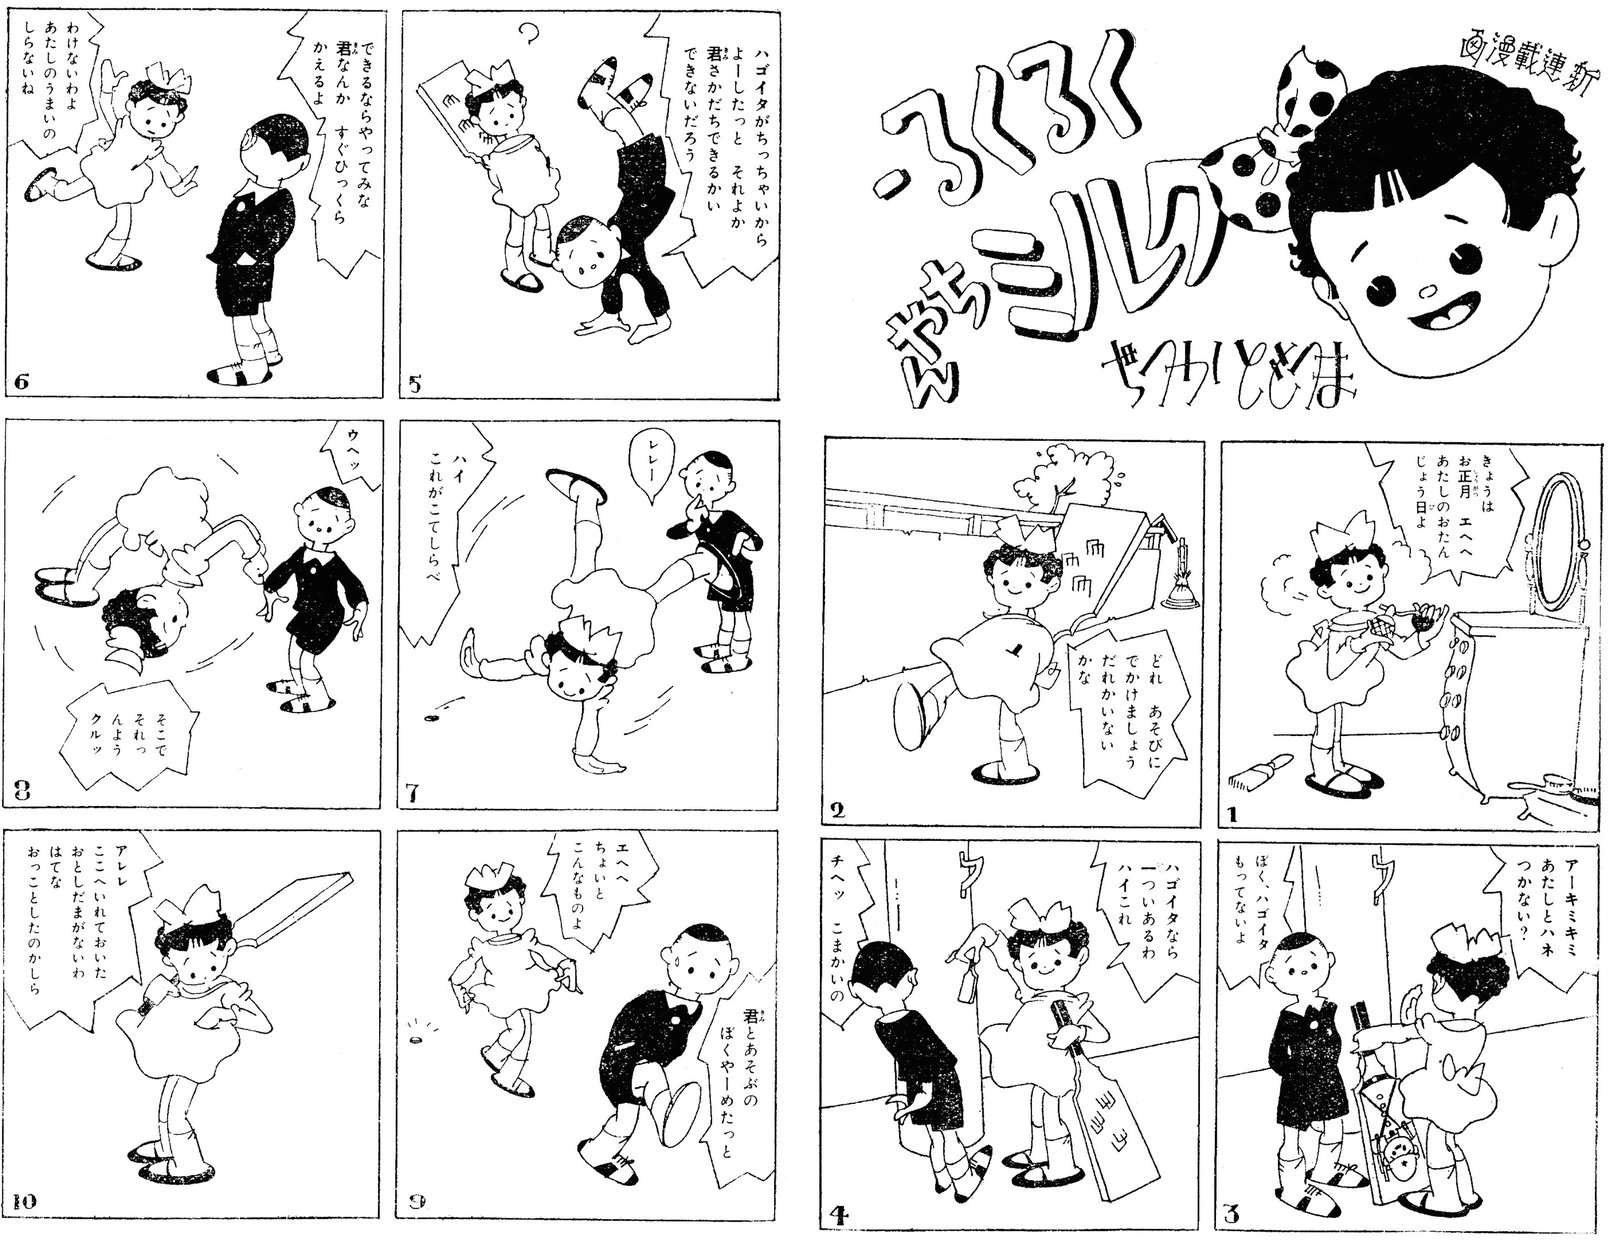 Matsumoto Katsuji Modern Tomboys And Early Shōjo Manga Springerlink